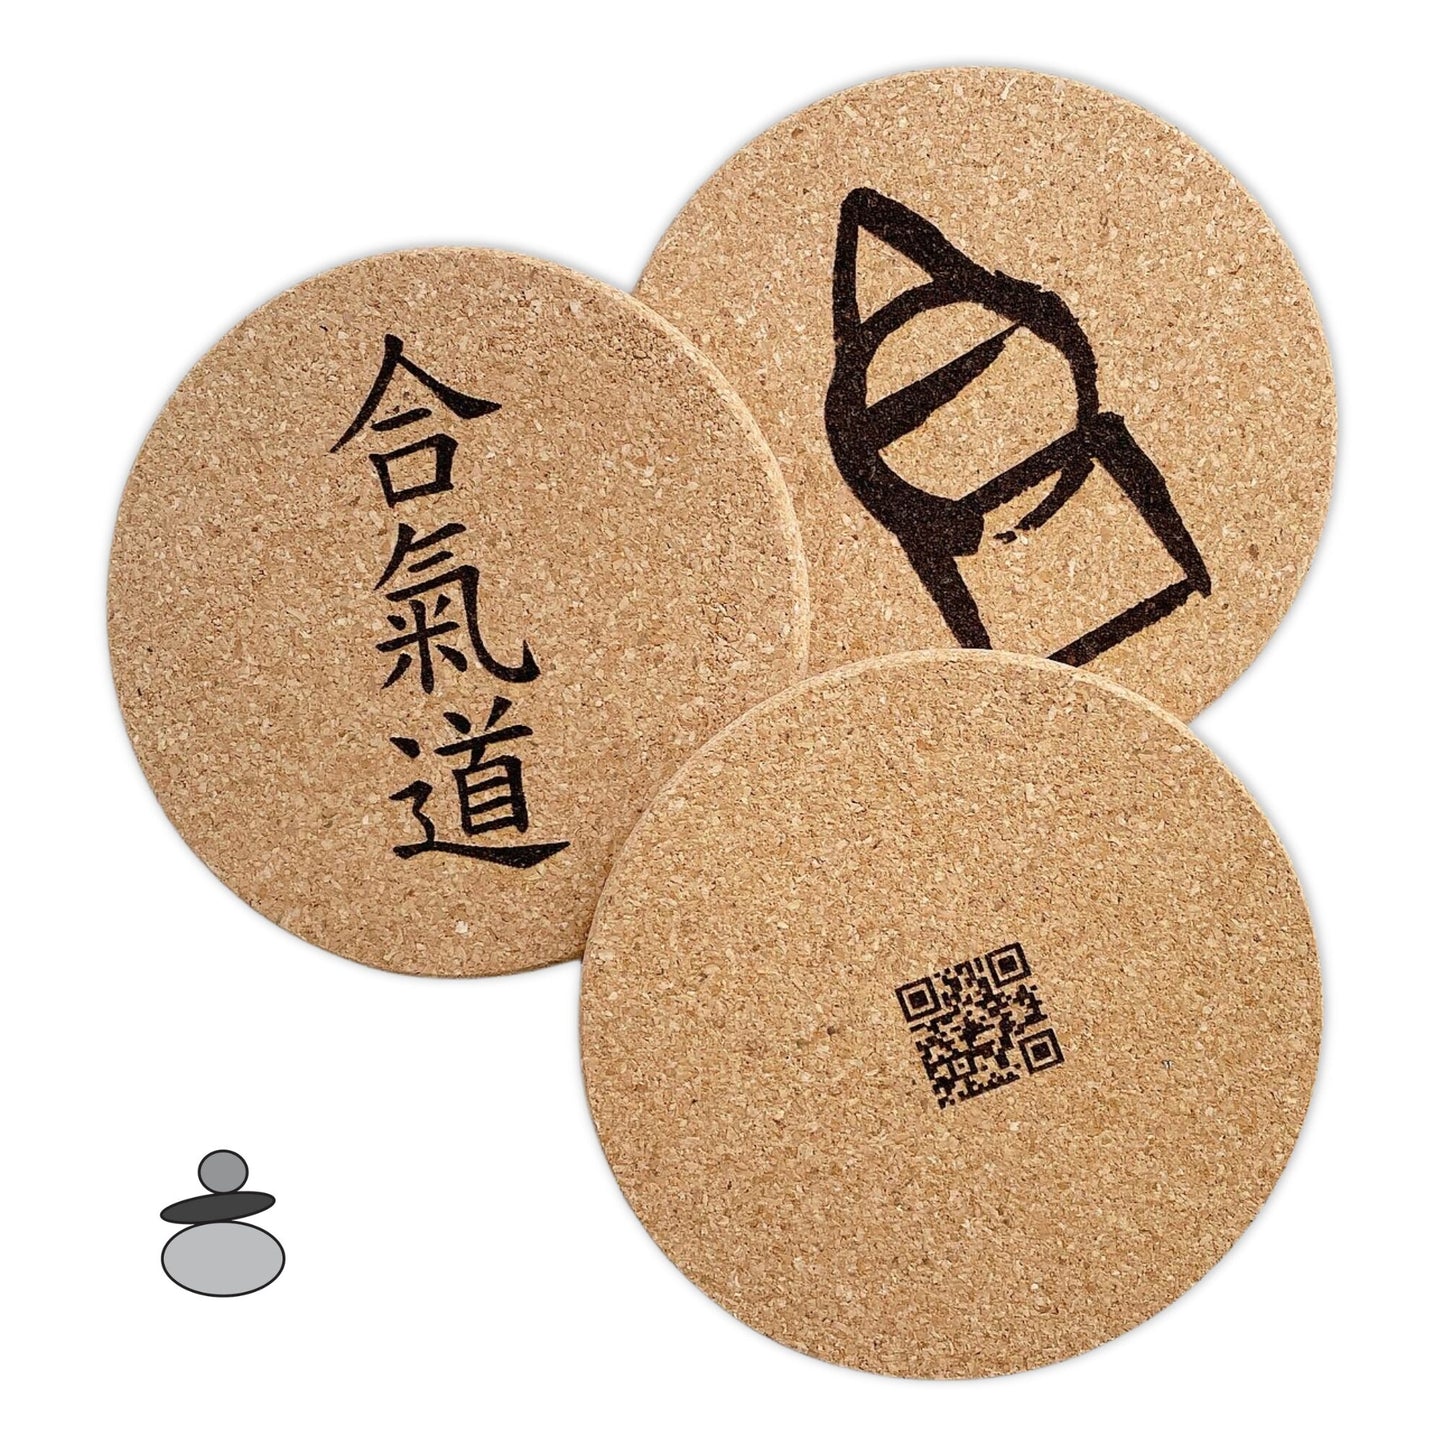 Aikido Coaster Set, Aikido Gift Idea, Gift For Sensei, Engraved Cork